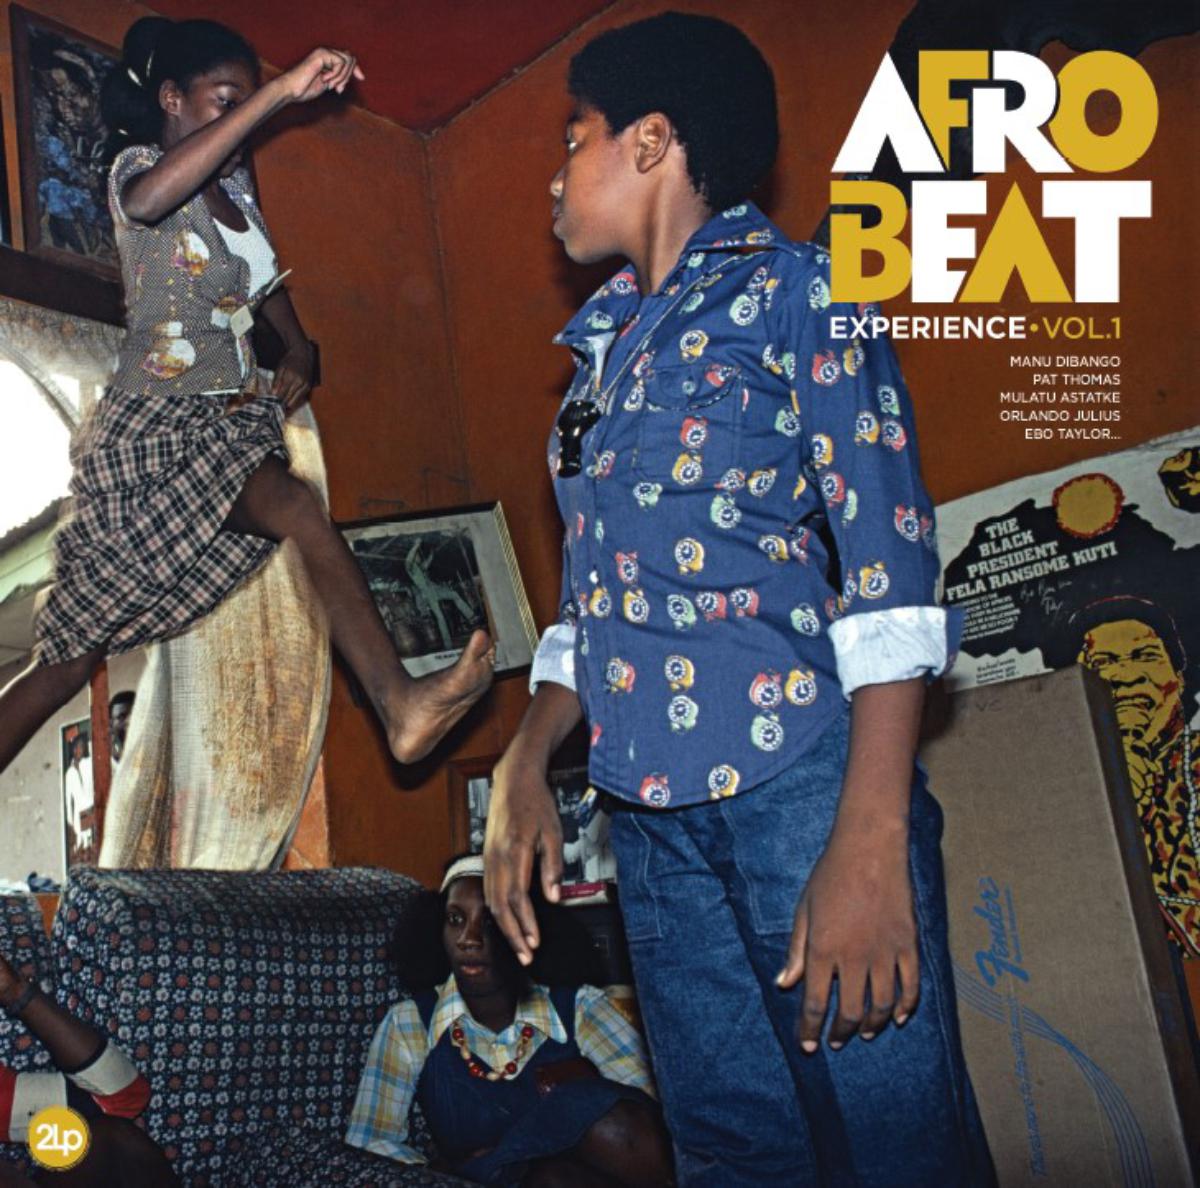 V/A - Afrobeat Experience Vol. 1 - 2LP